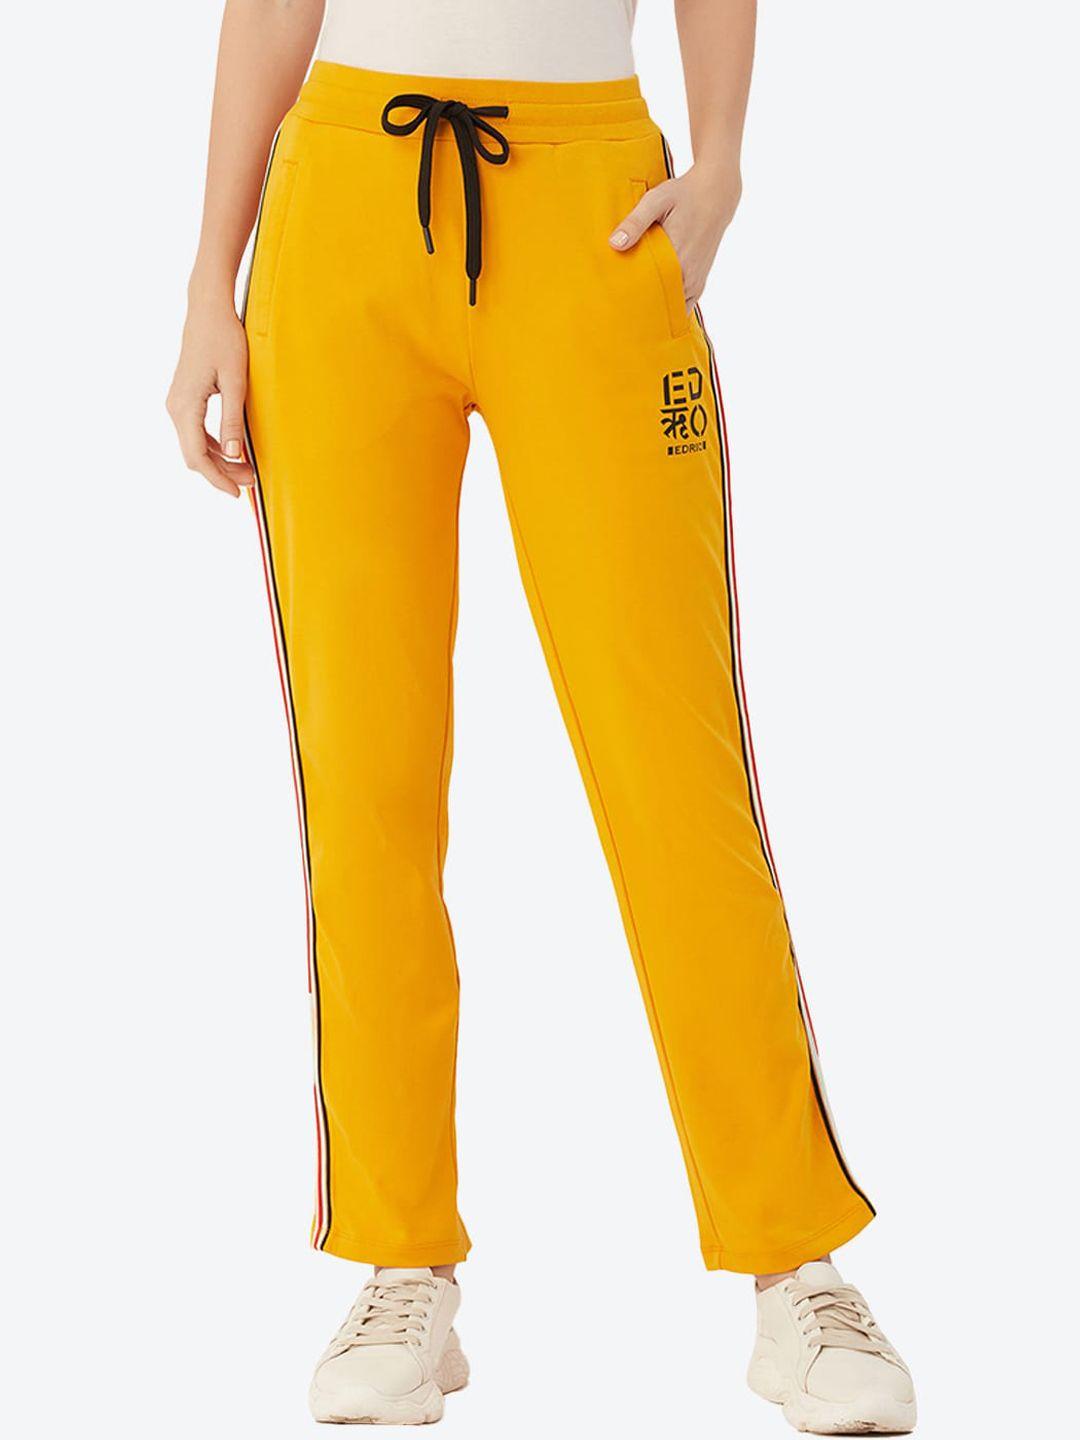 edrio-women-mustard-yellow-striped-cotton-track-pants